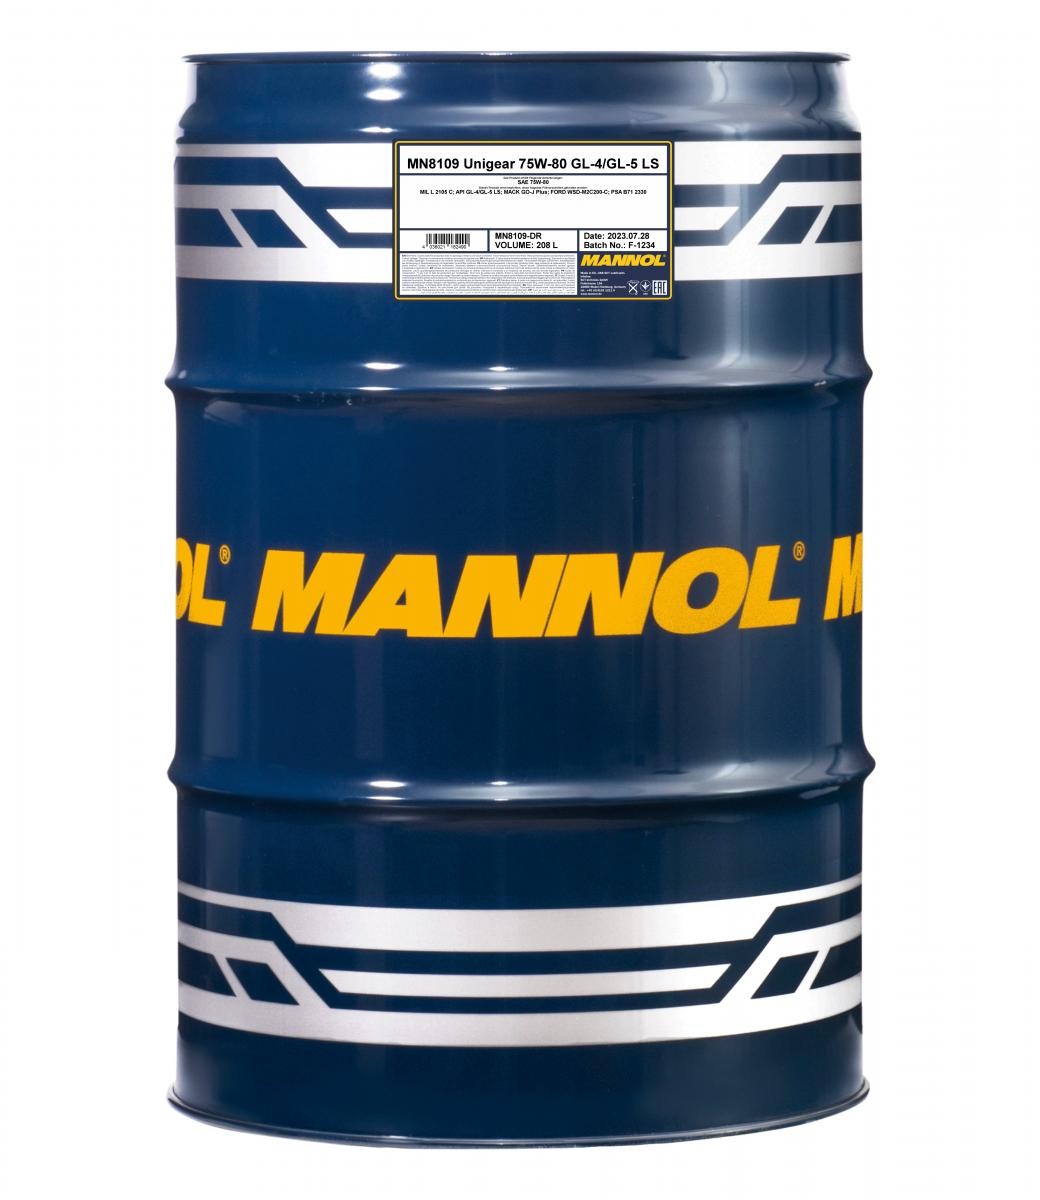 MANNOL Unigear 75W-80, Synthetic Oil, Capacity: 208l MACK GO-J Plus, Ford WSD-M2C200-C, PSA B71 2330, MIL-L 2105 C Transmission oil MN8109-DR buy